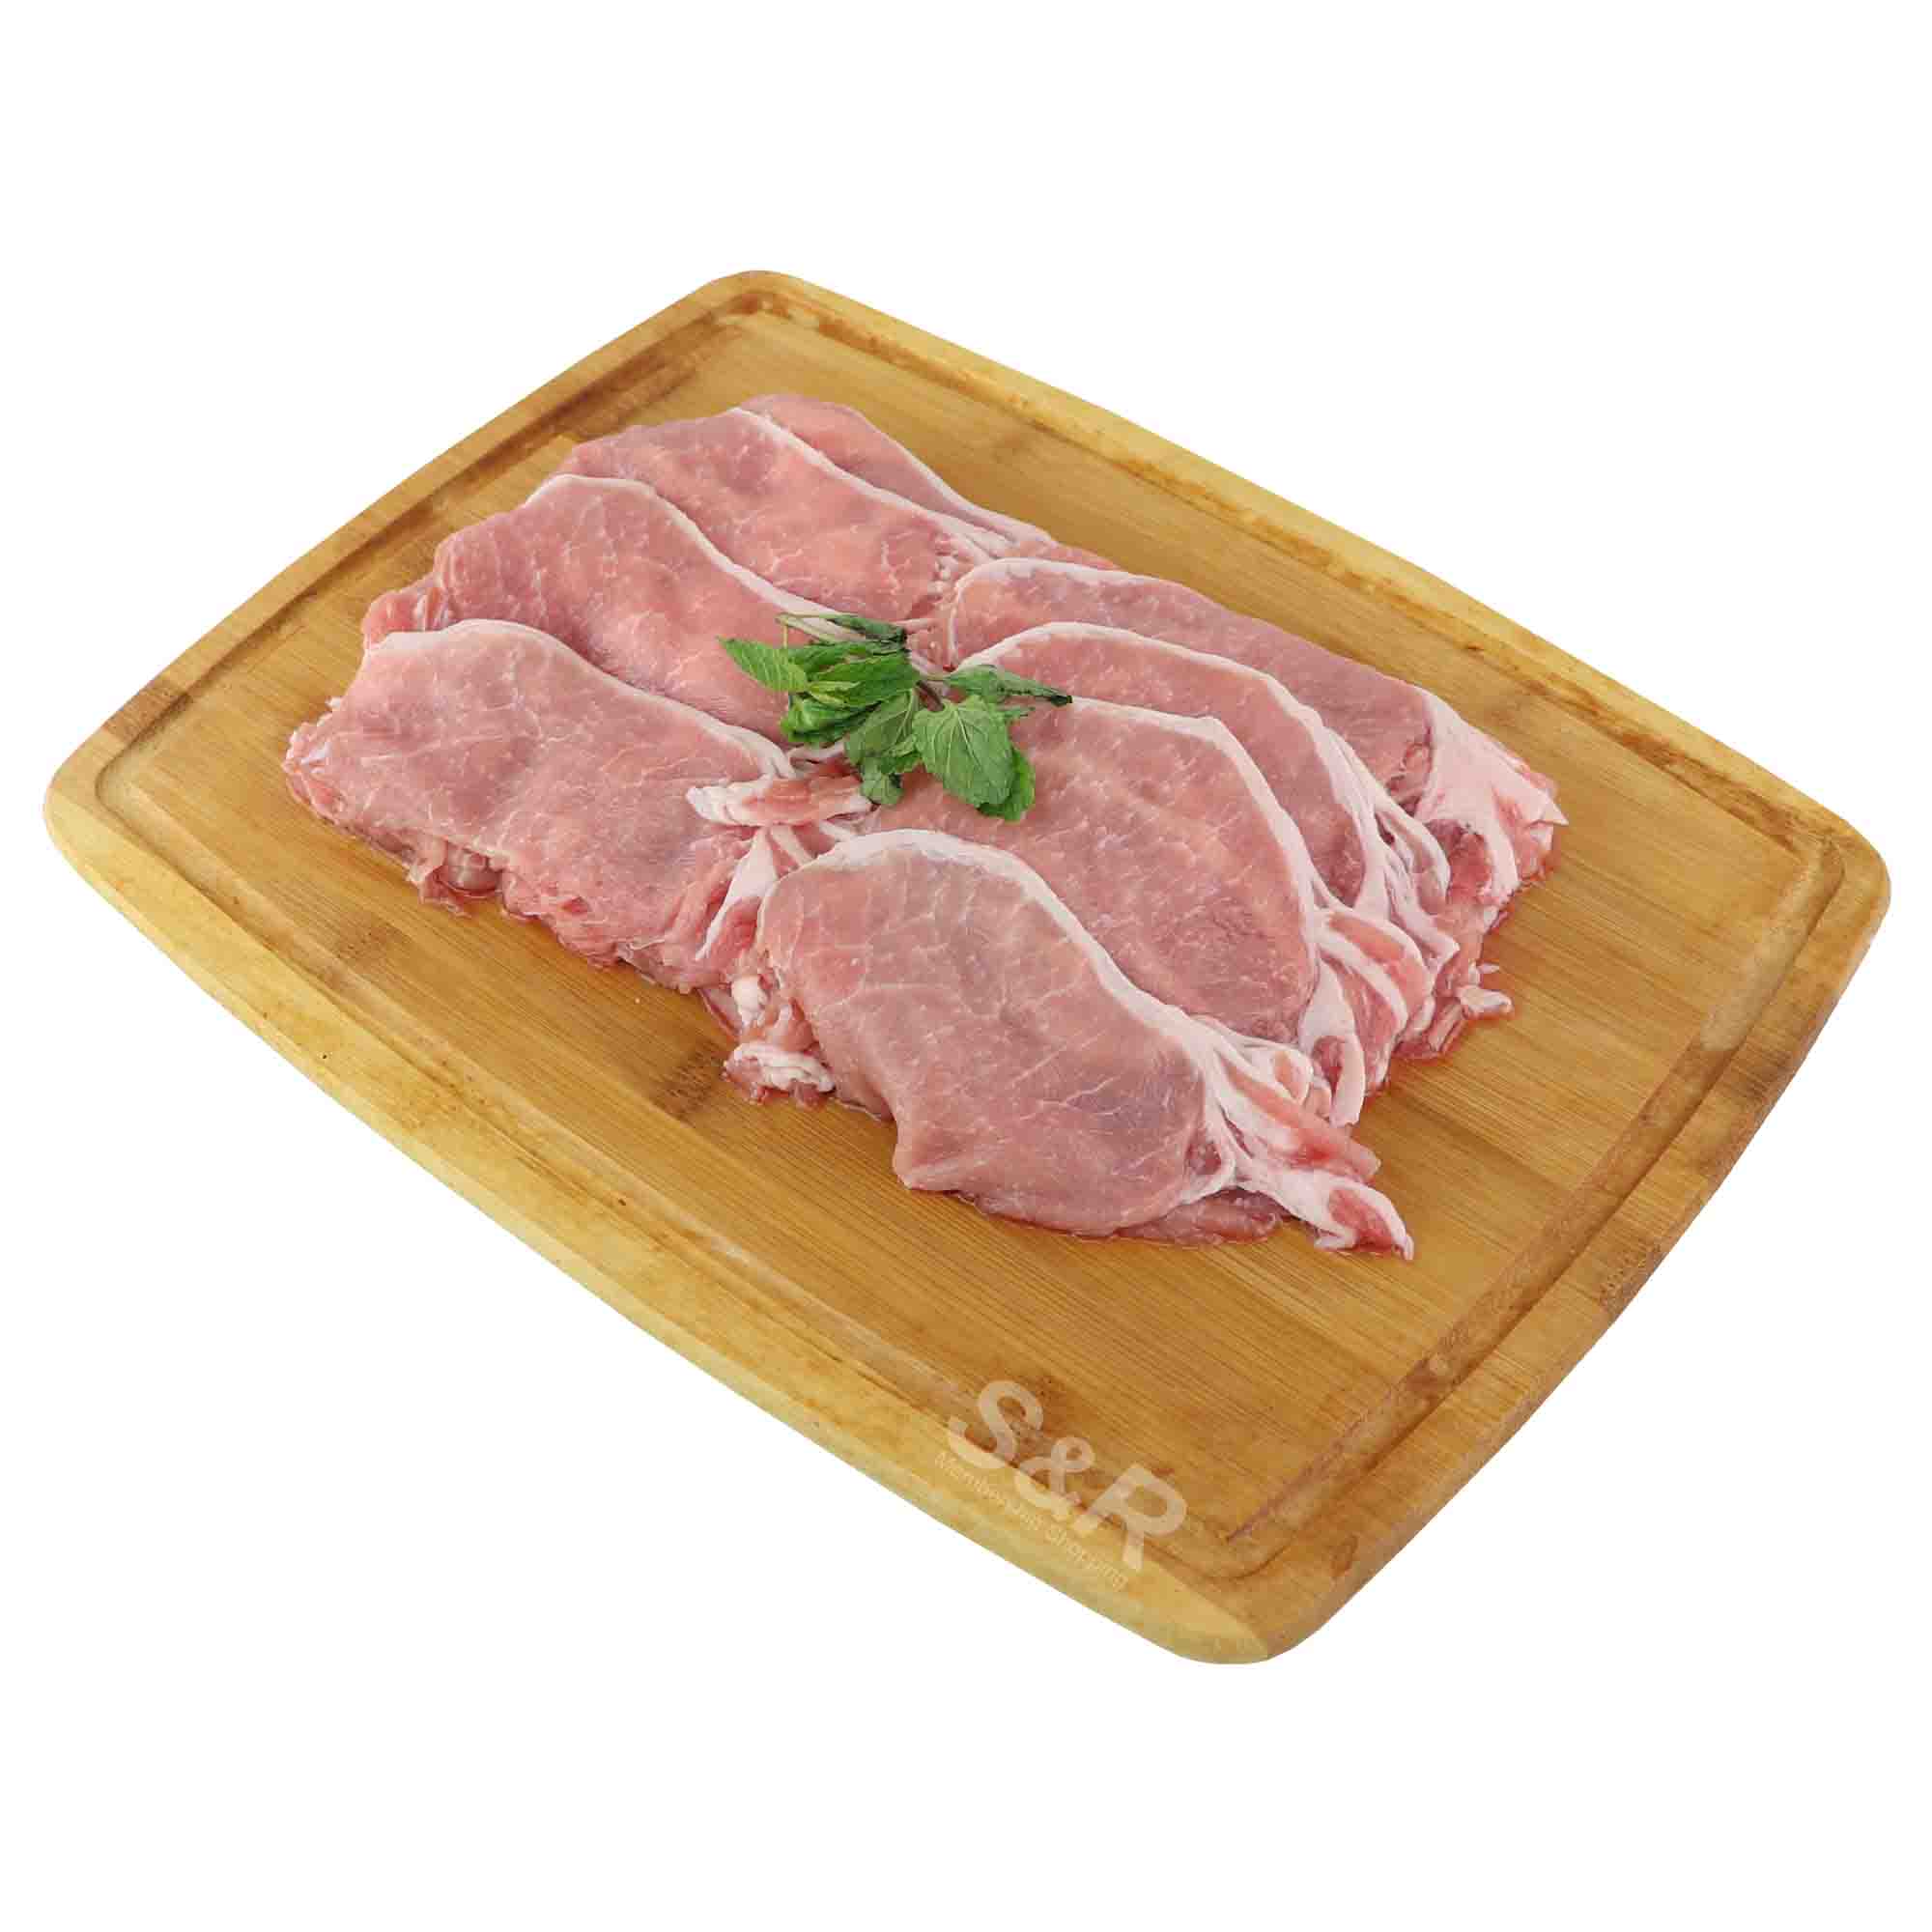 Members' Value Pork Sukiyaki Cut approx. 1.7kg